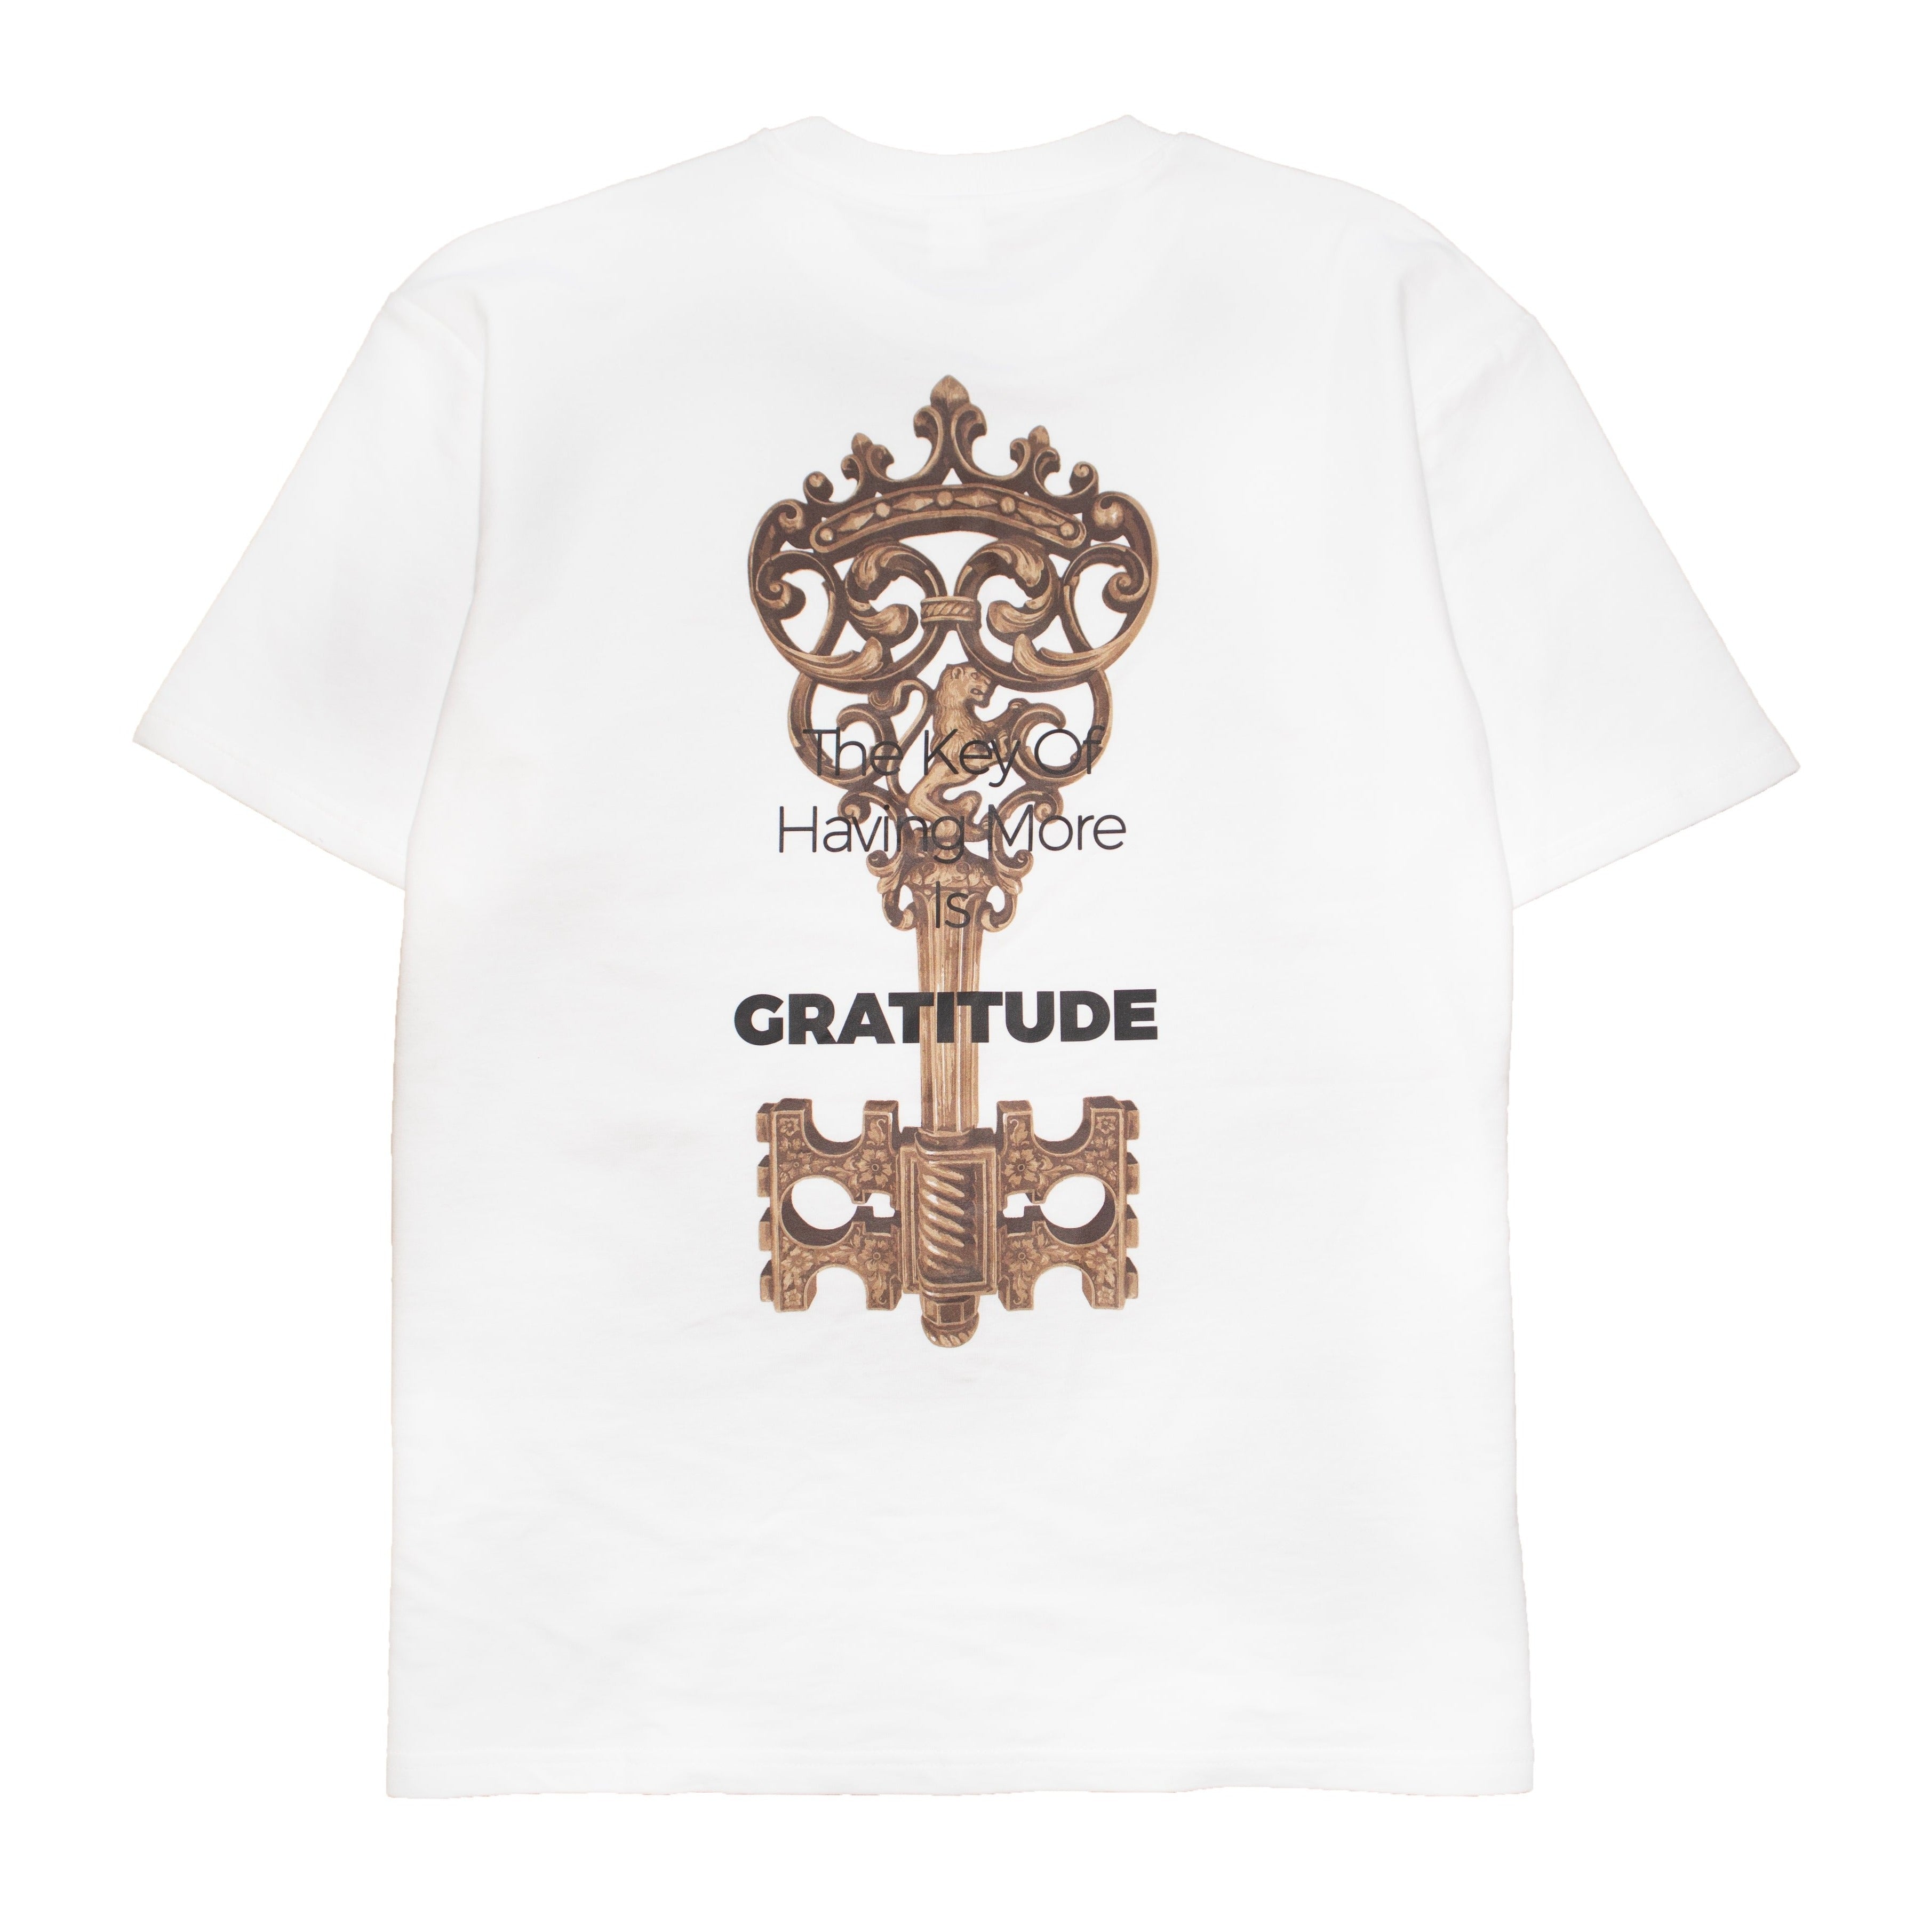 "GRATITUDE" T SHIRT